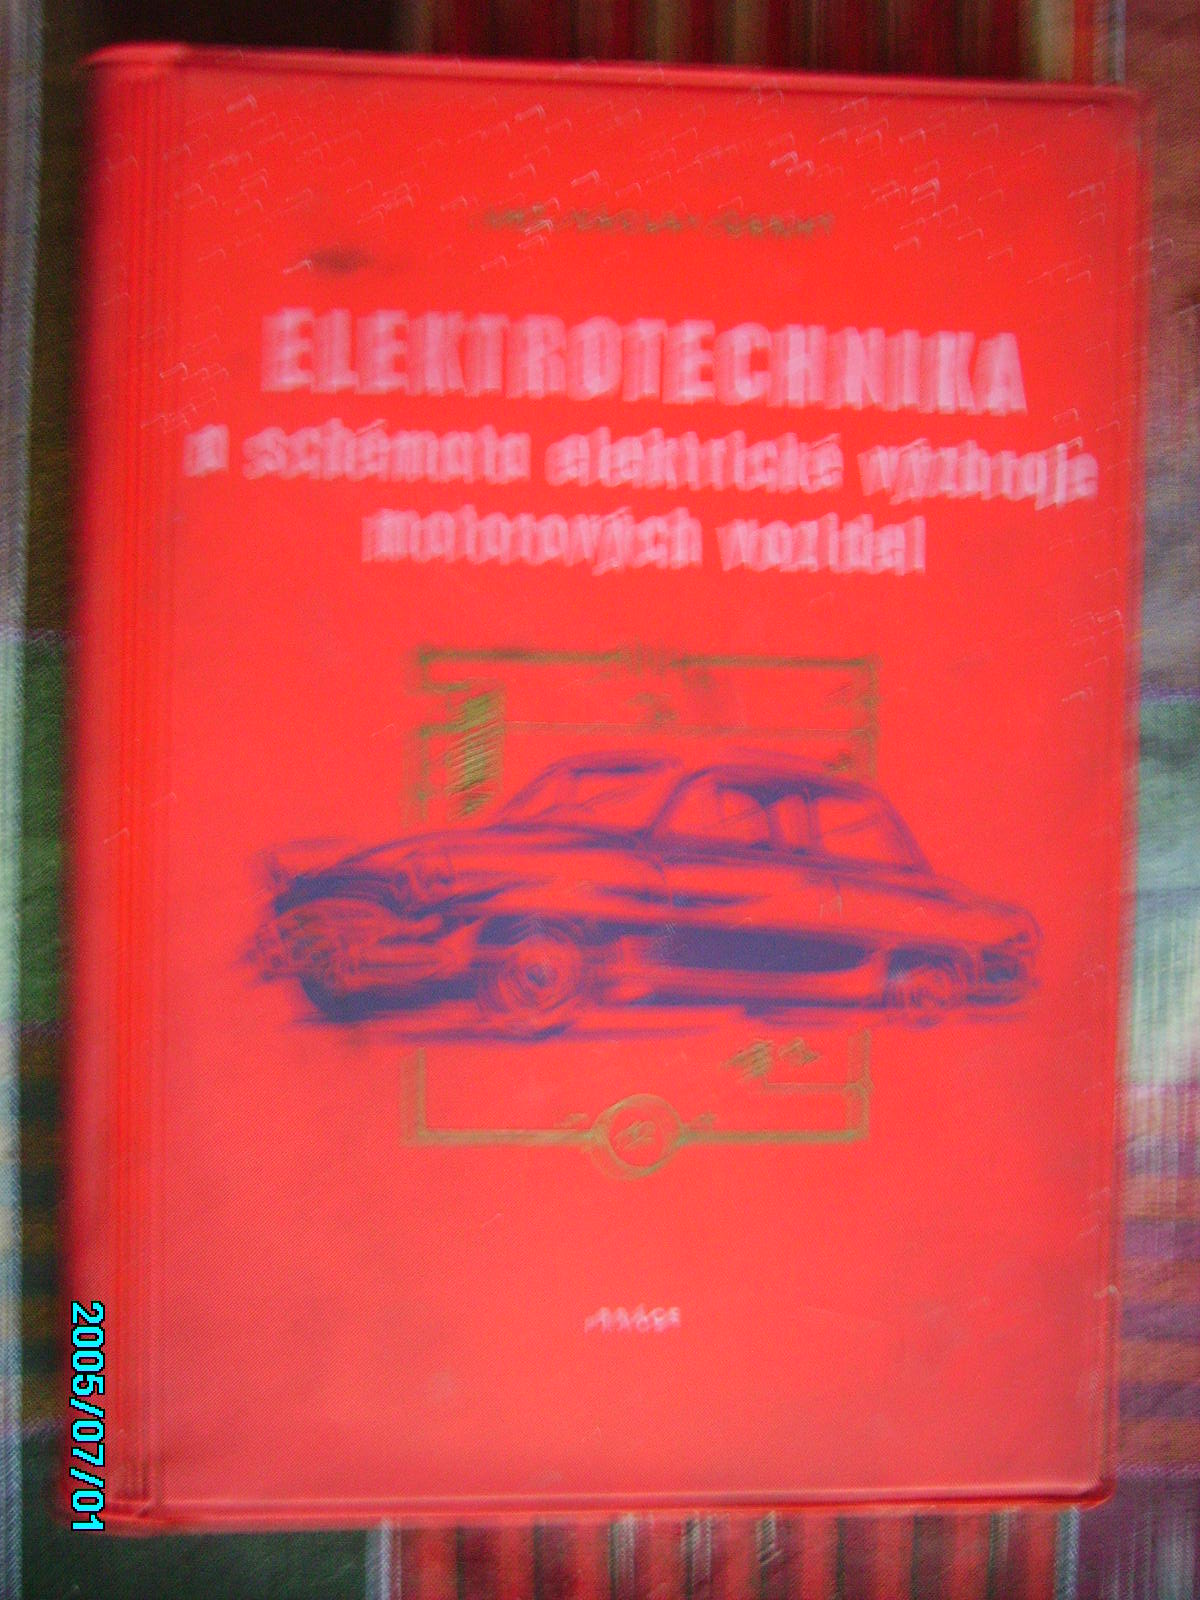 zobrazit detail knihy ern, Vclav: Elektrotechnika a schmata elektric